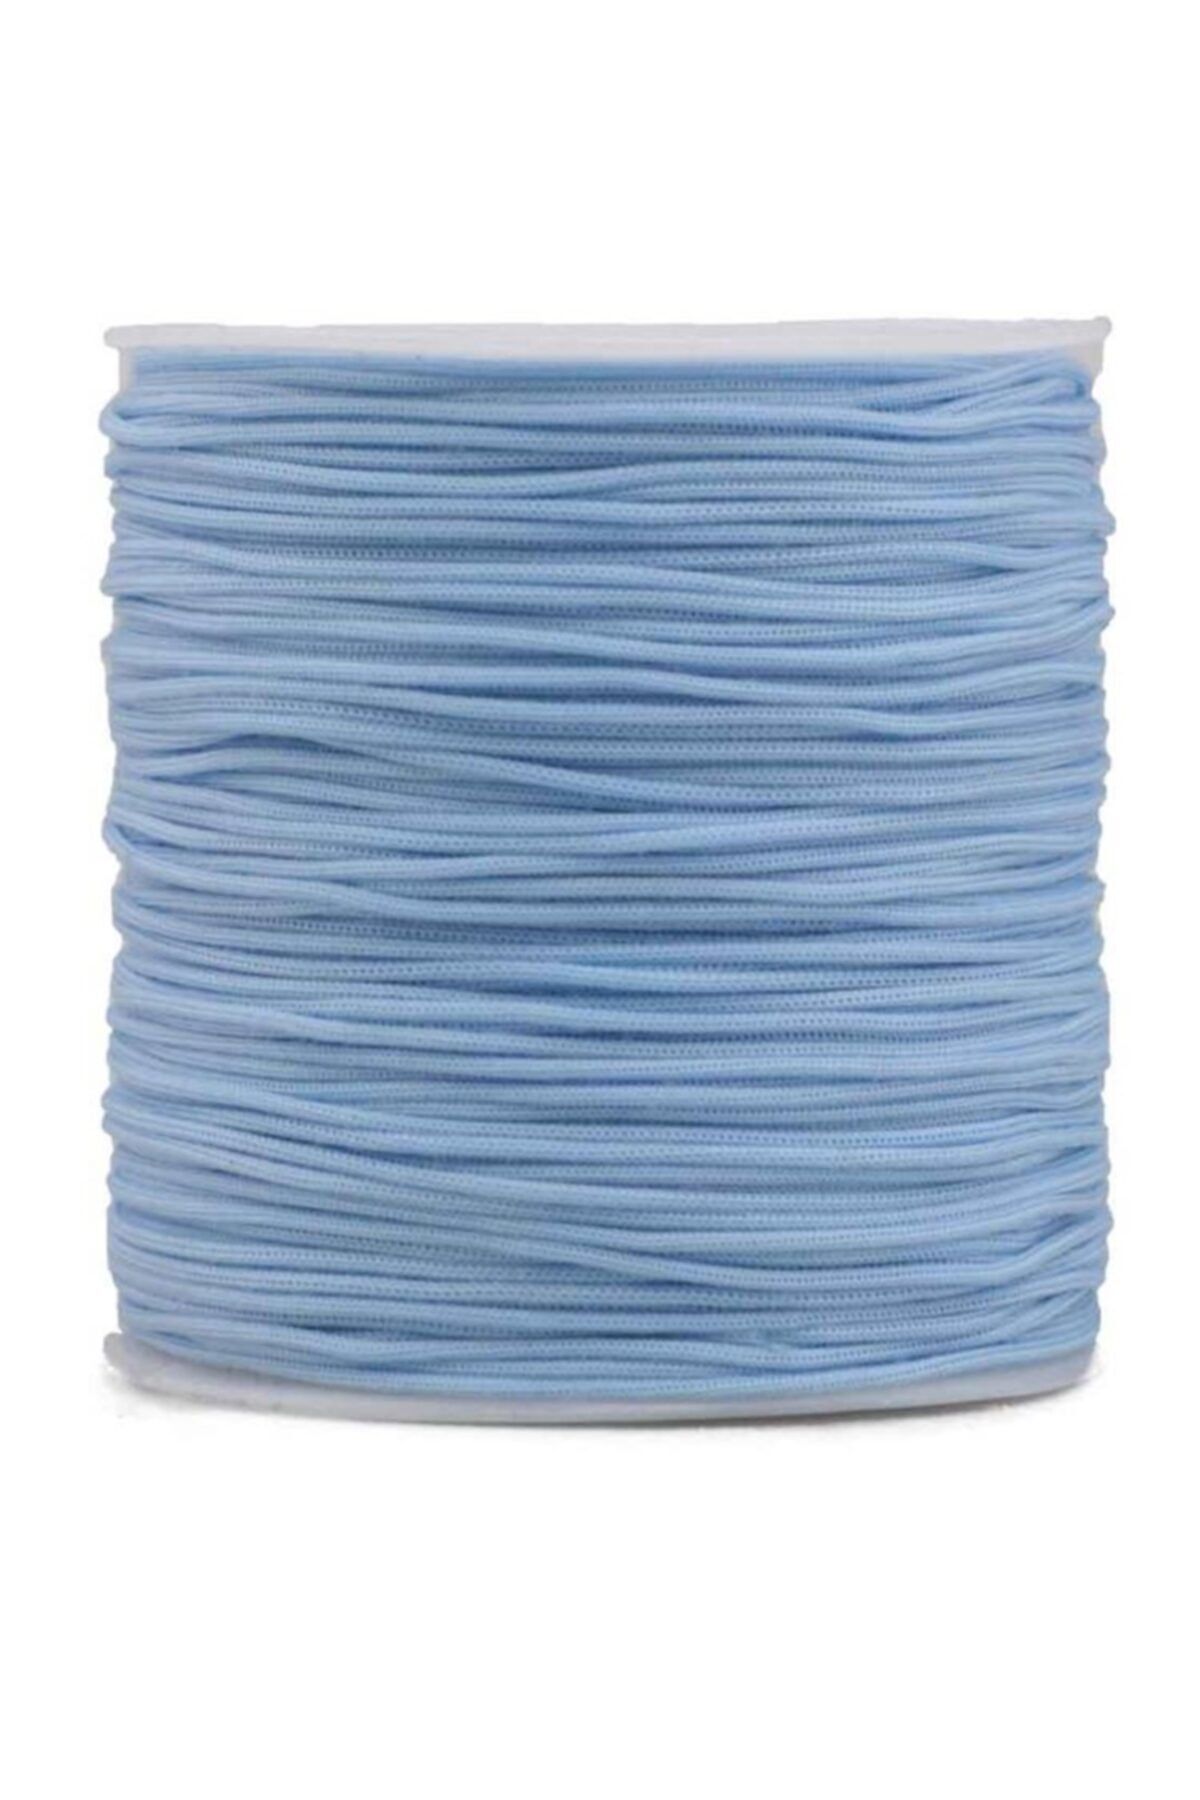 Kezban Tekstil Mavi Renkli Paraşüt Ipi Bileklik Ipi 0,8 Mm 100 Metre